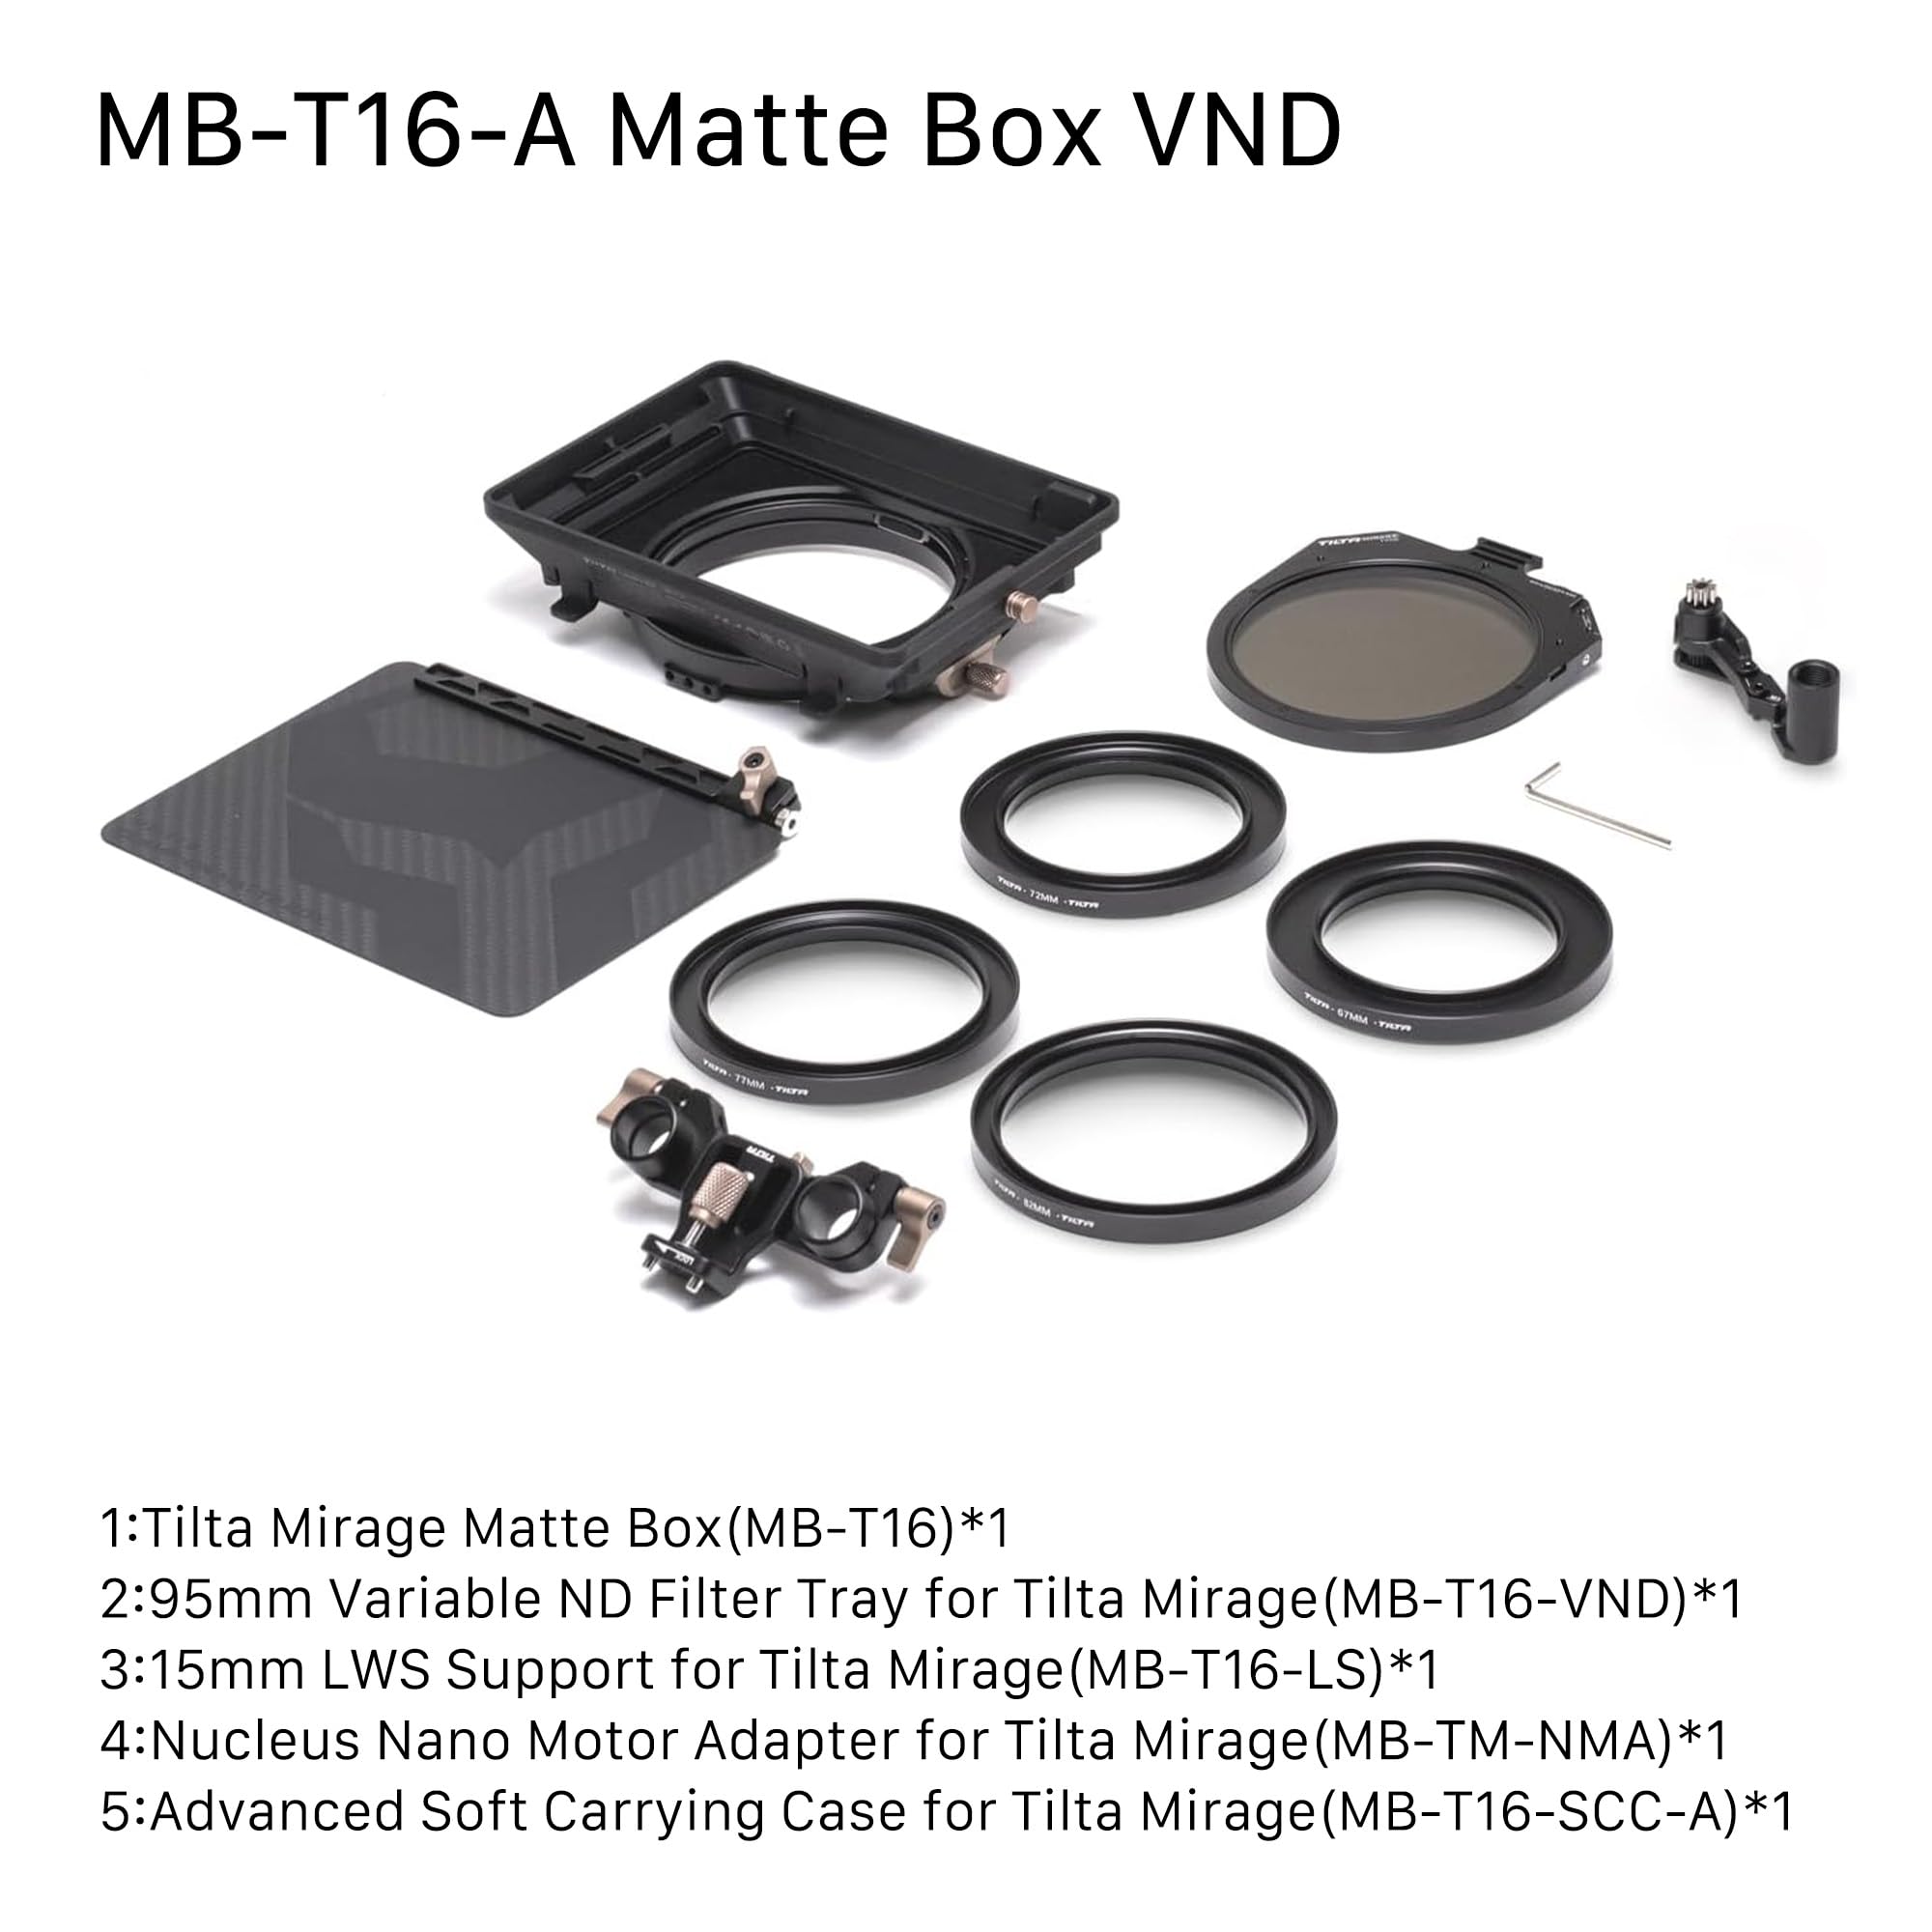 Tilta Mirage Matte Box | 4” x 5.6” and New 95mm Circular Filters | (67/72/77/82mm) Adapter Rings | Lightweight | Cartridge Filter Design | Prevents Vignetting | (Matte Box+VND)